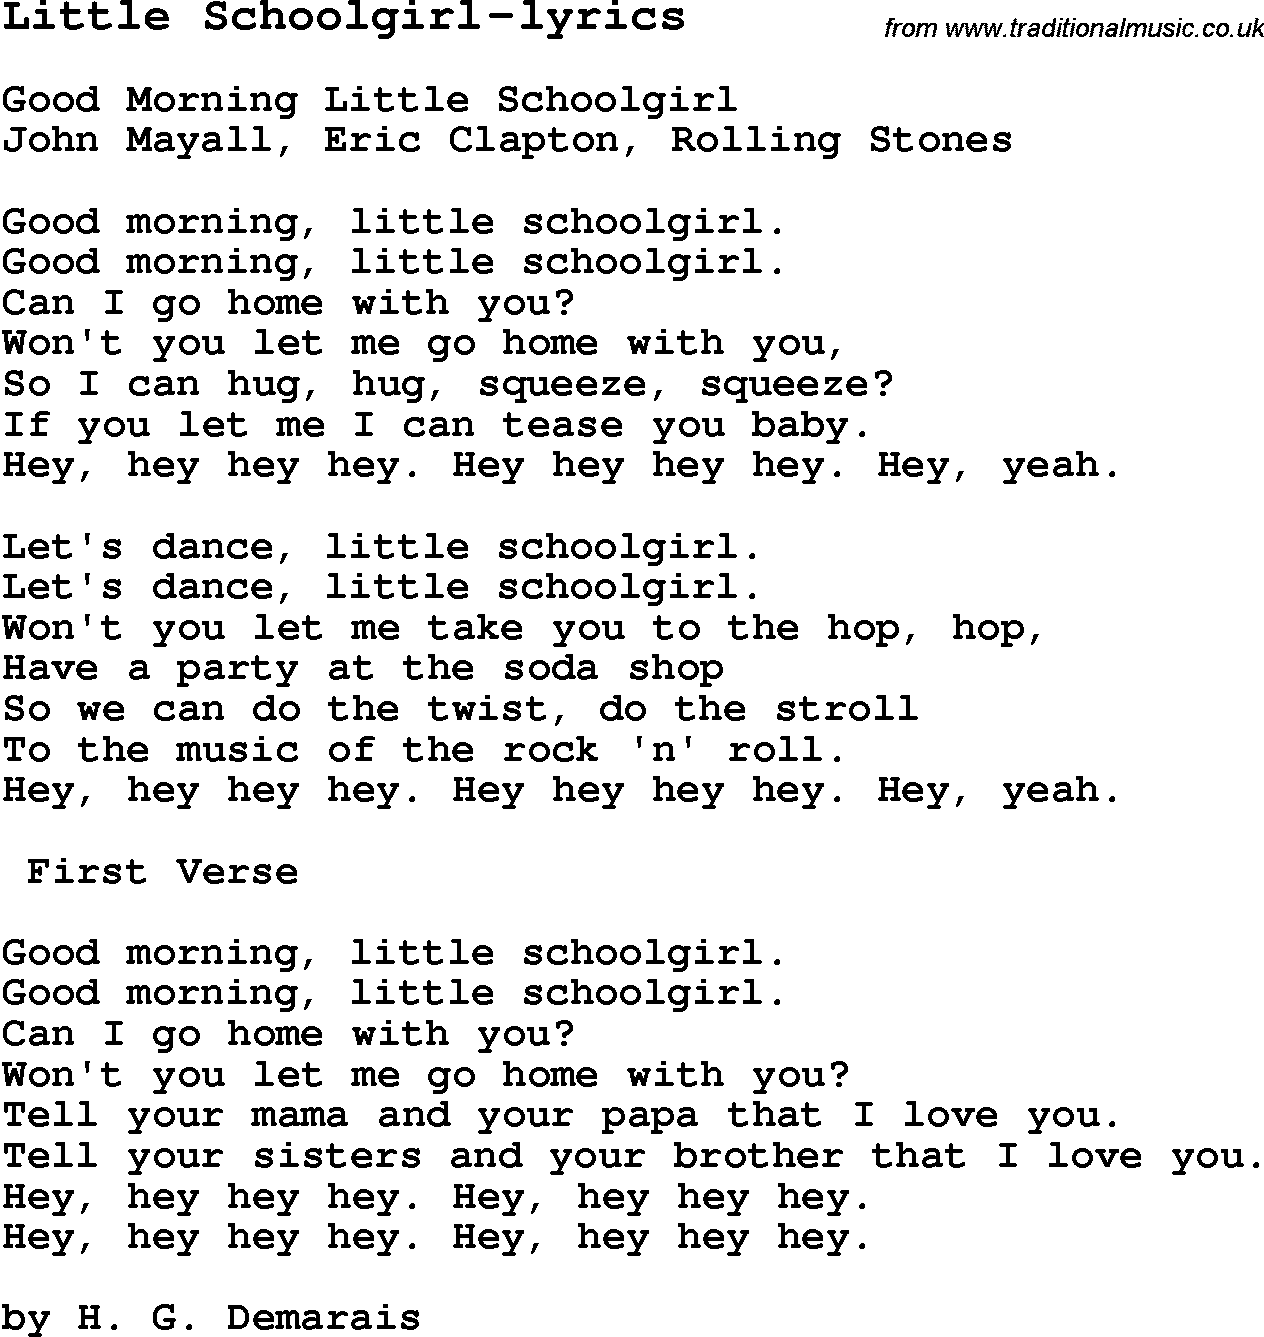 Blues Guitar Song, lyrics, chords, tablature, playing hints for Little Schoolgirl-lyrics